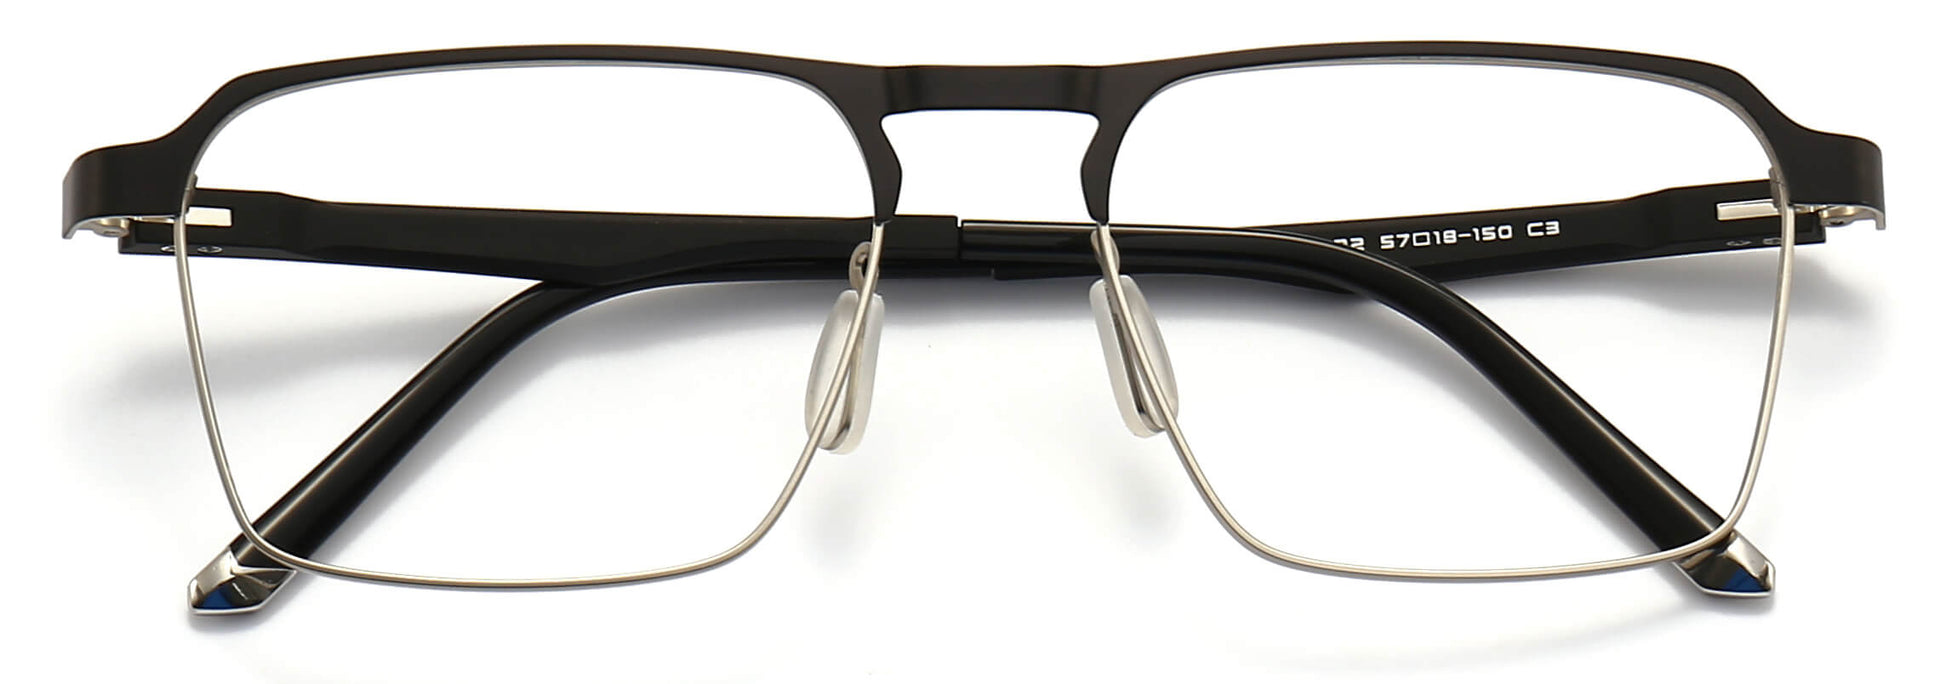 November Square Black Eyeglasses from ANRRI, closed view